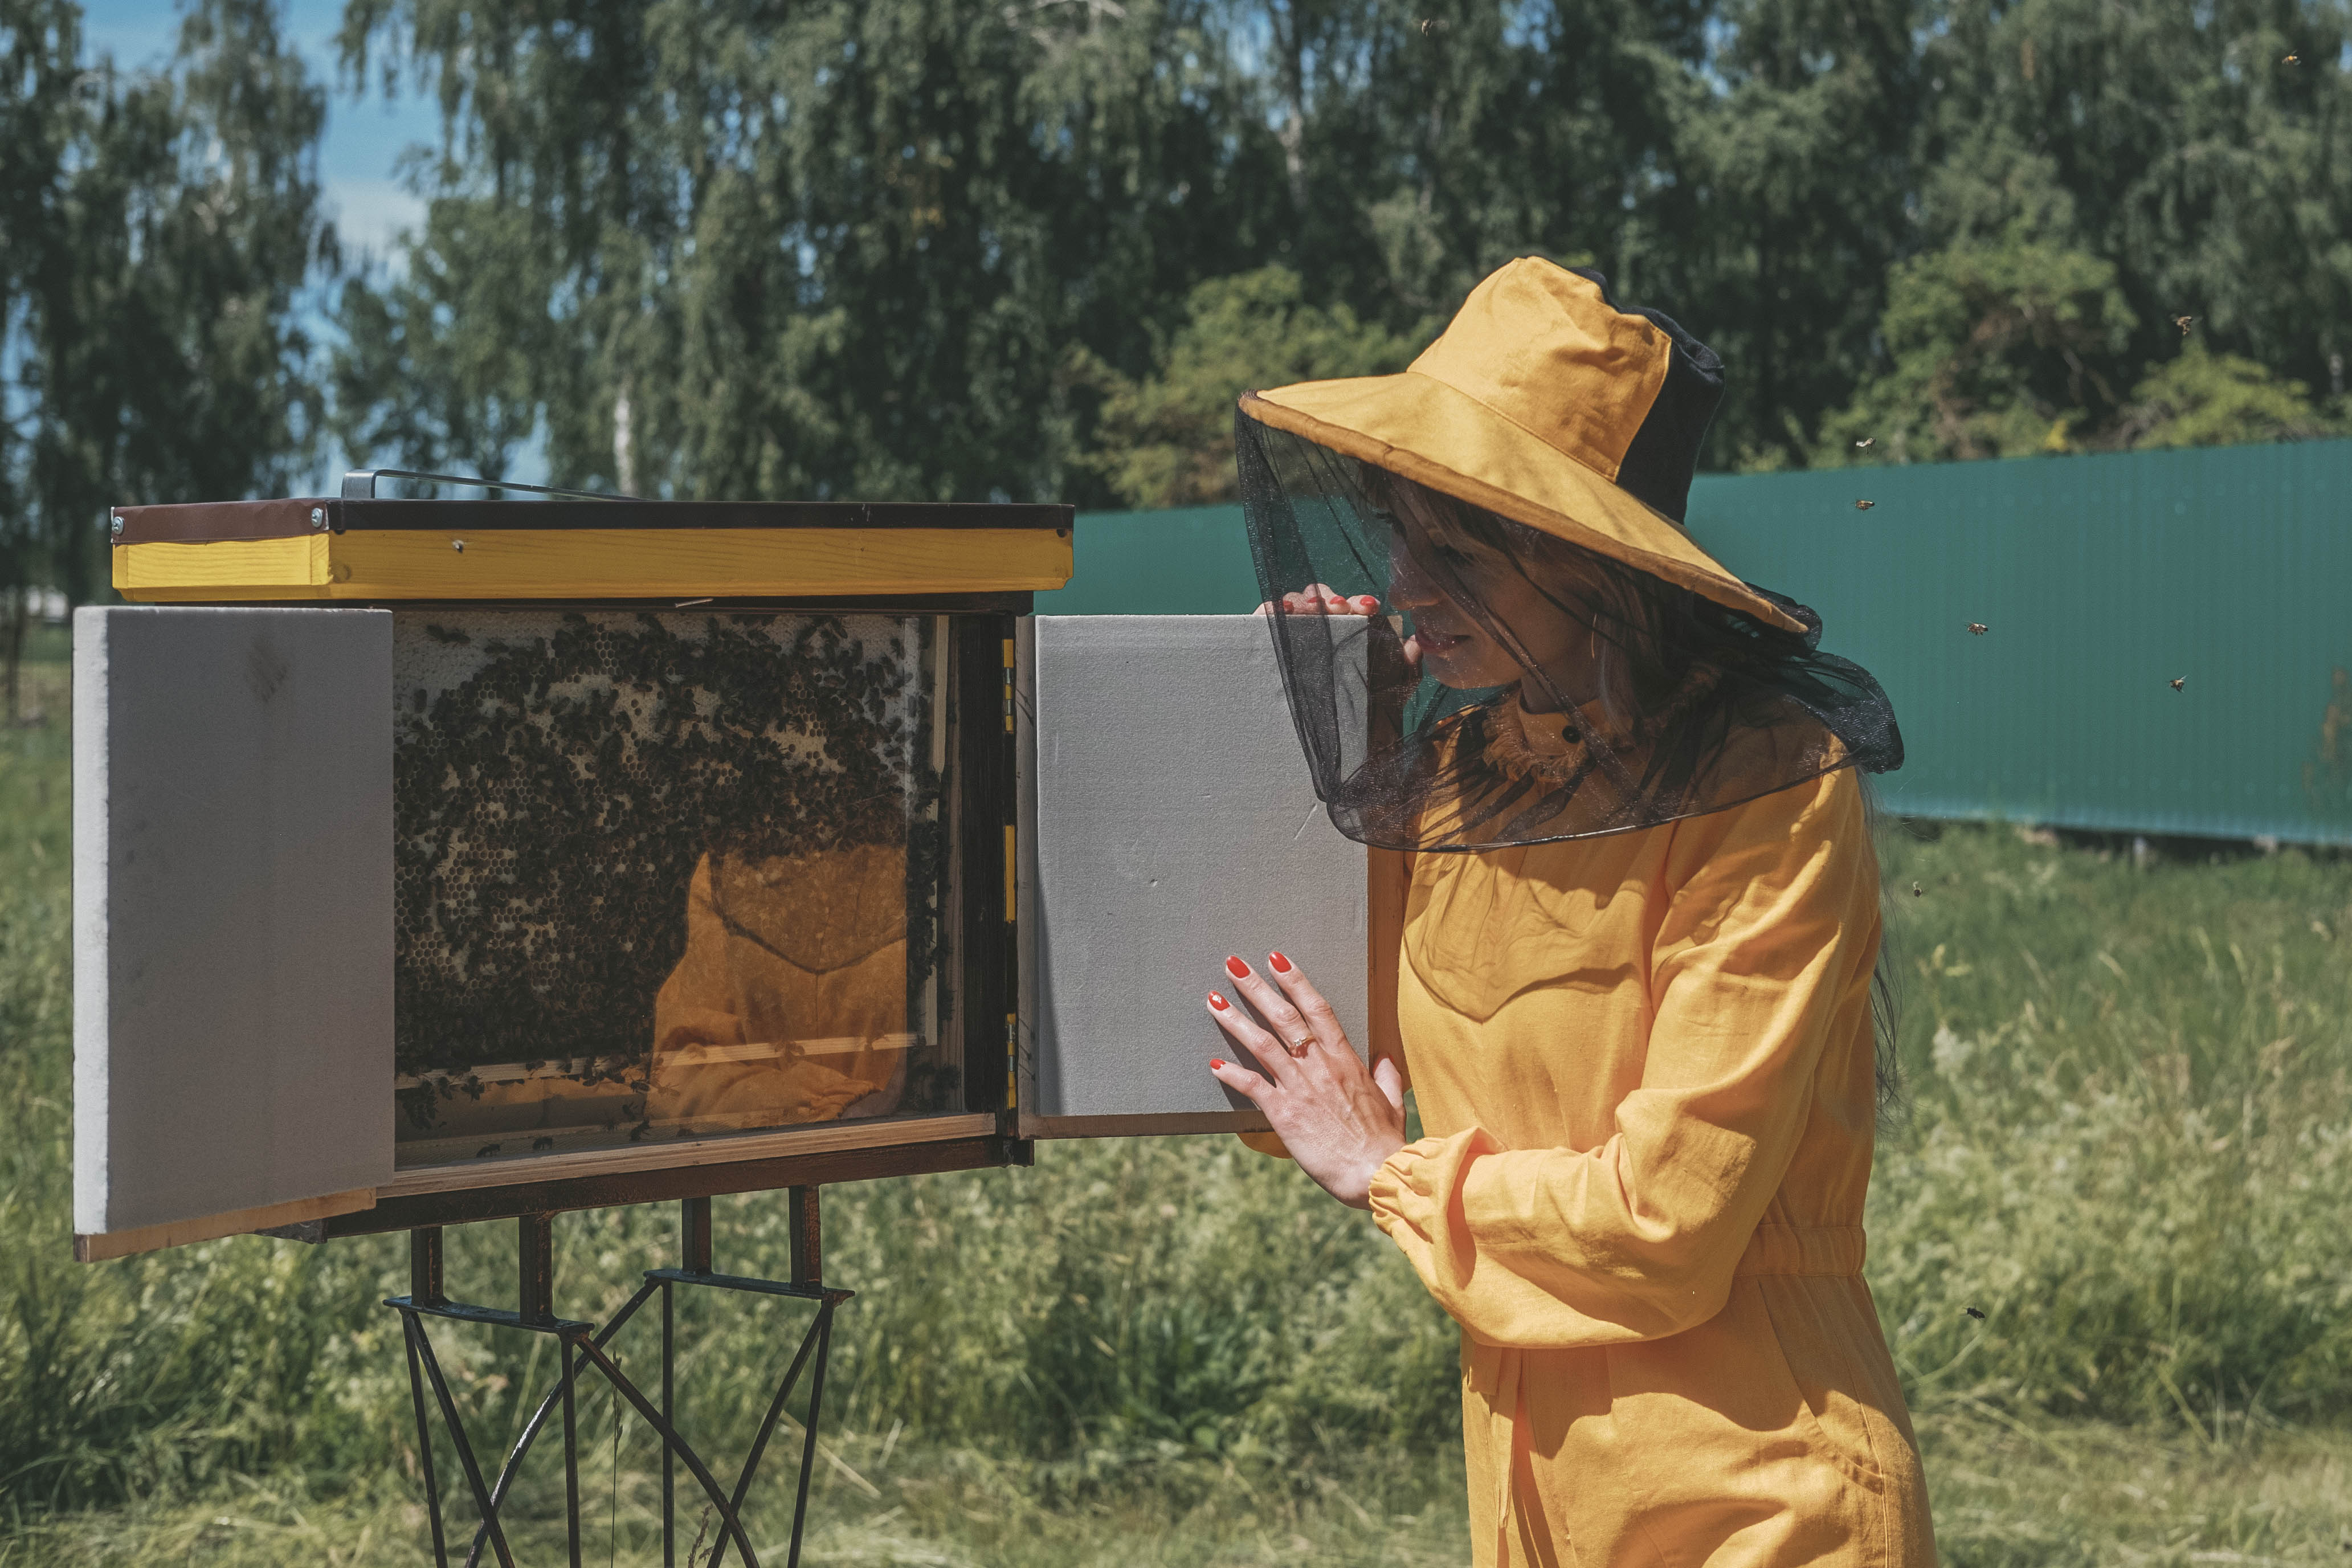 III. The Role of Beekeeping in Promoting Ecological Balance